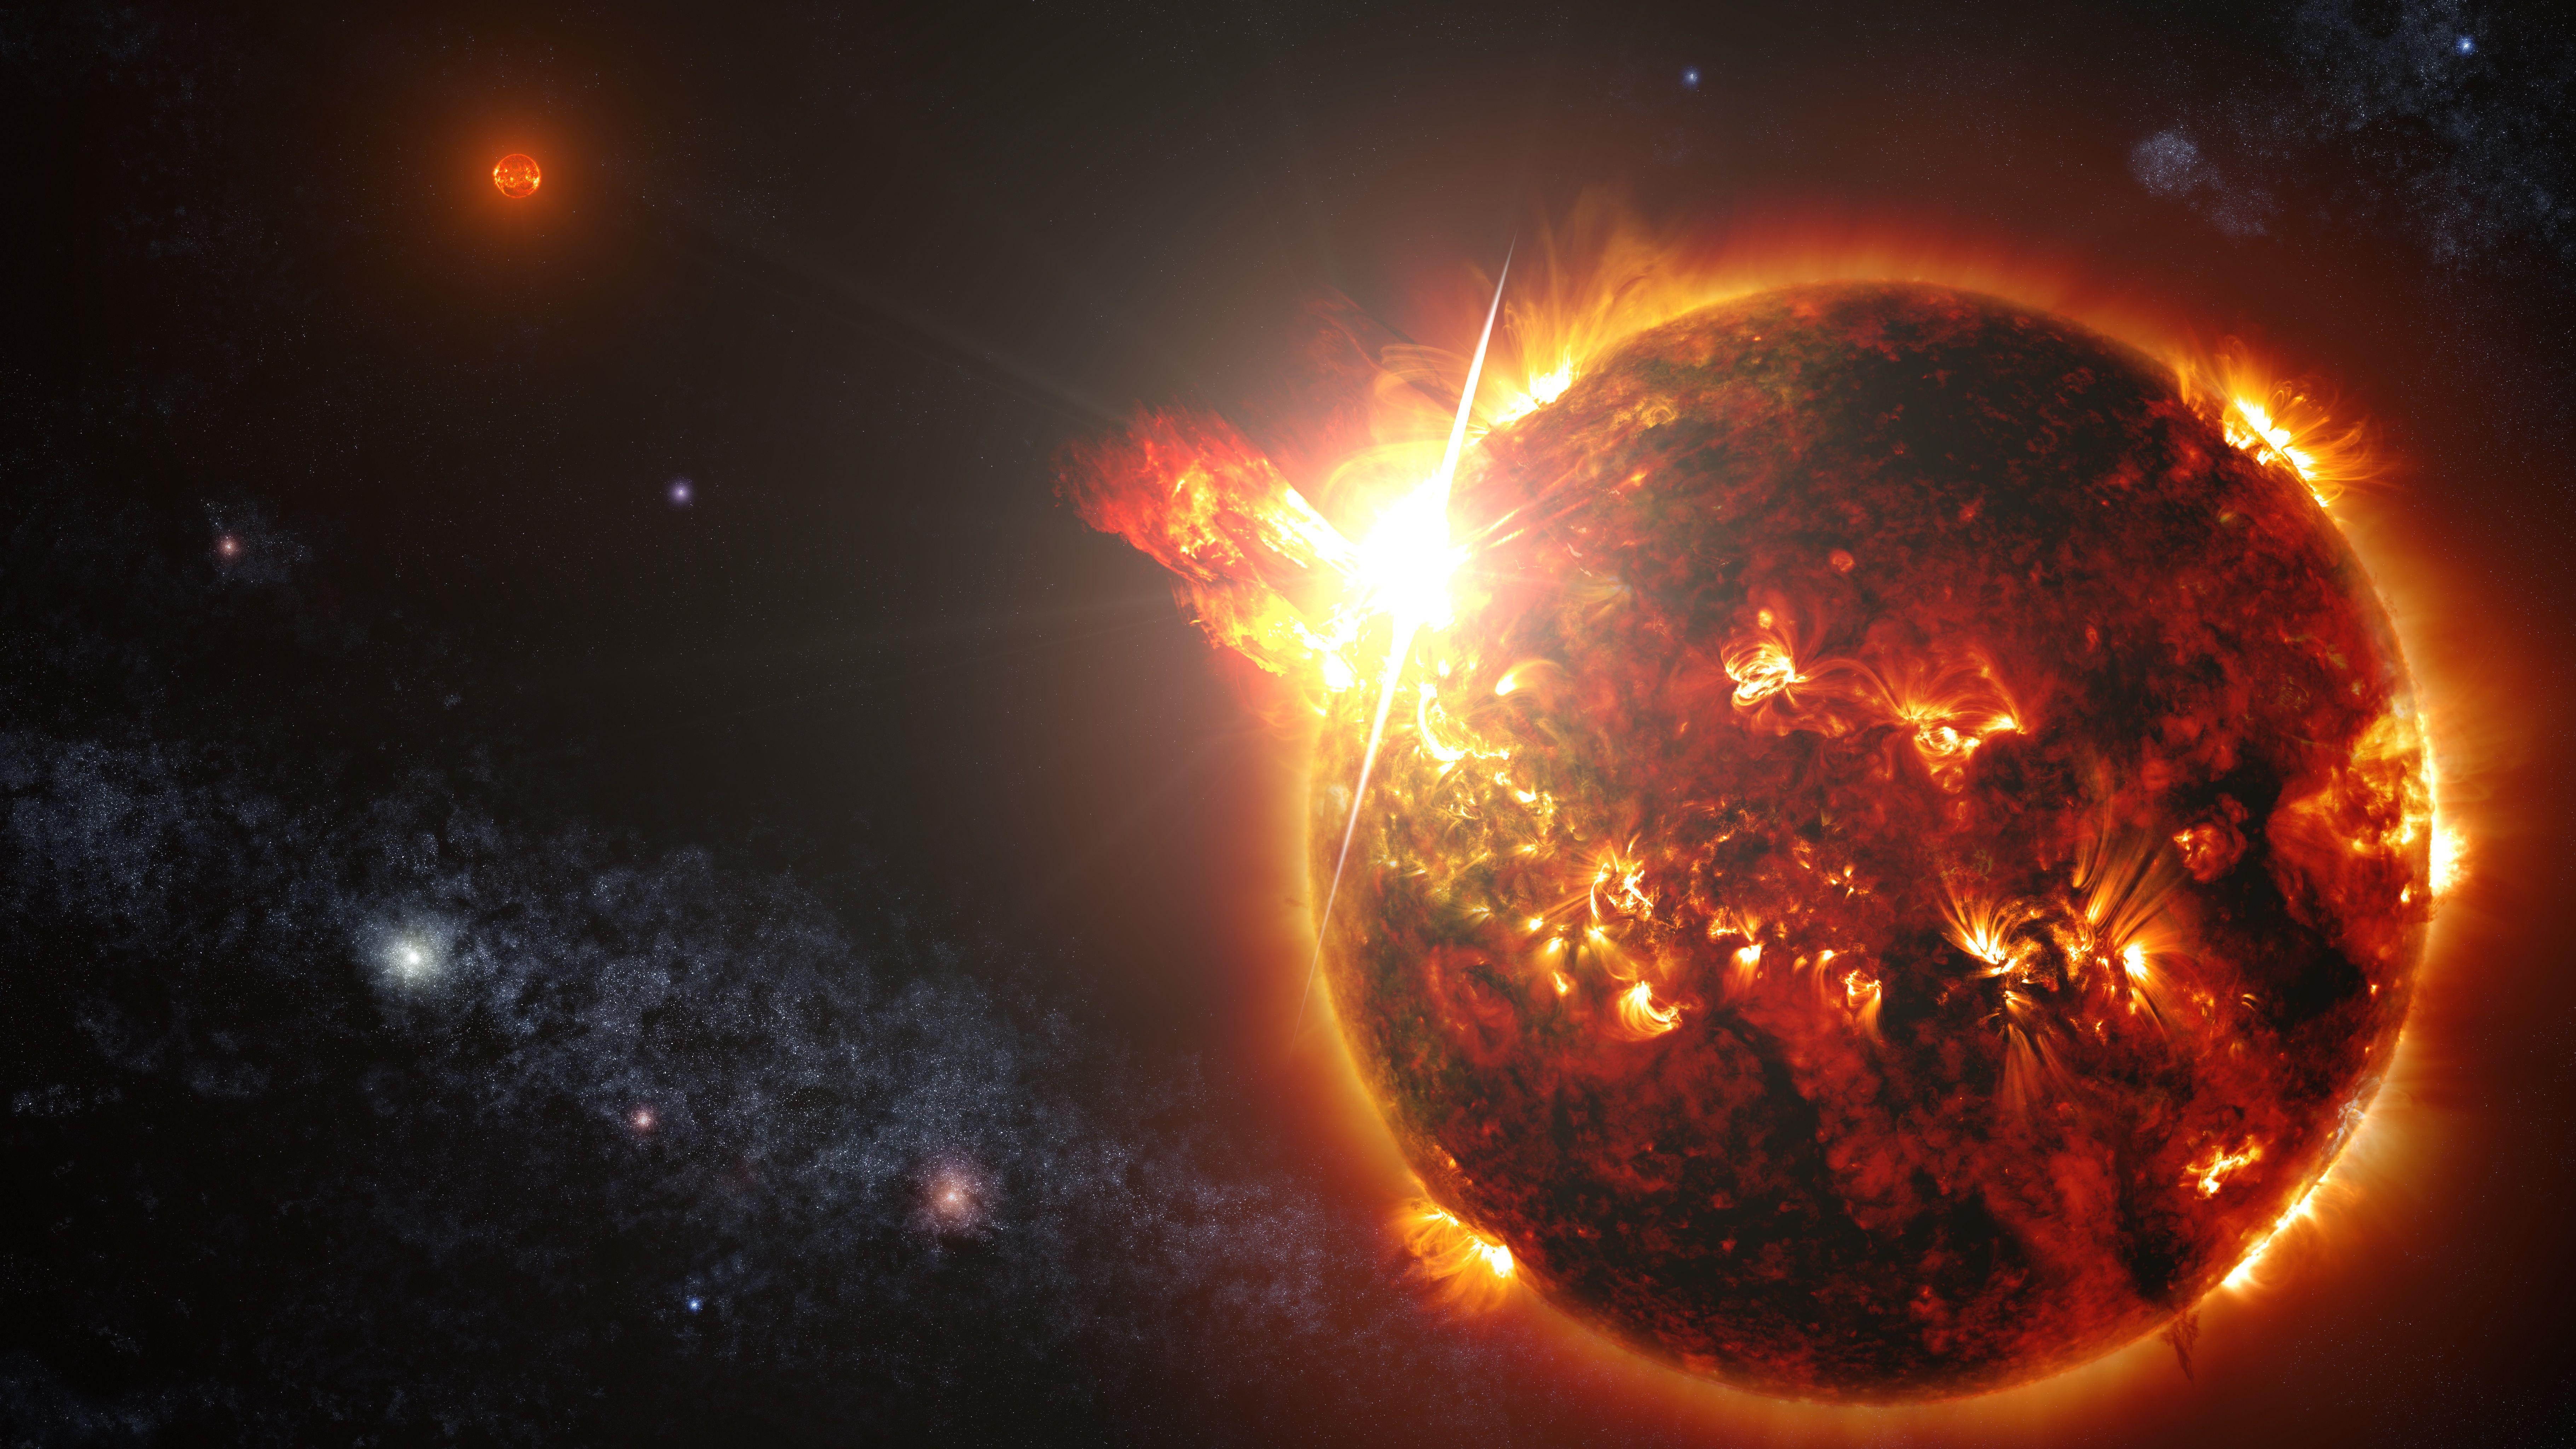 Wallpaper Dwarf star, Solar flares, Stellar explosions, 4K, 8K